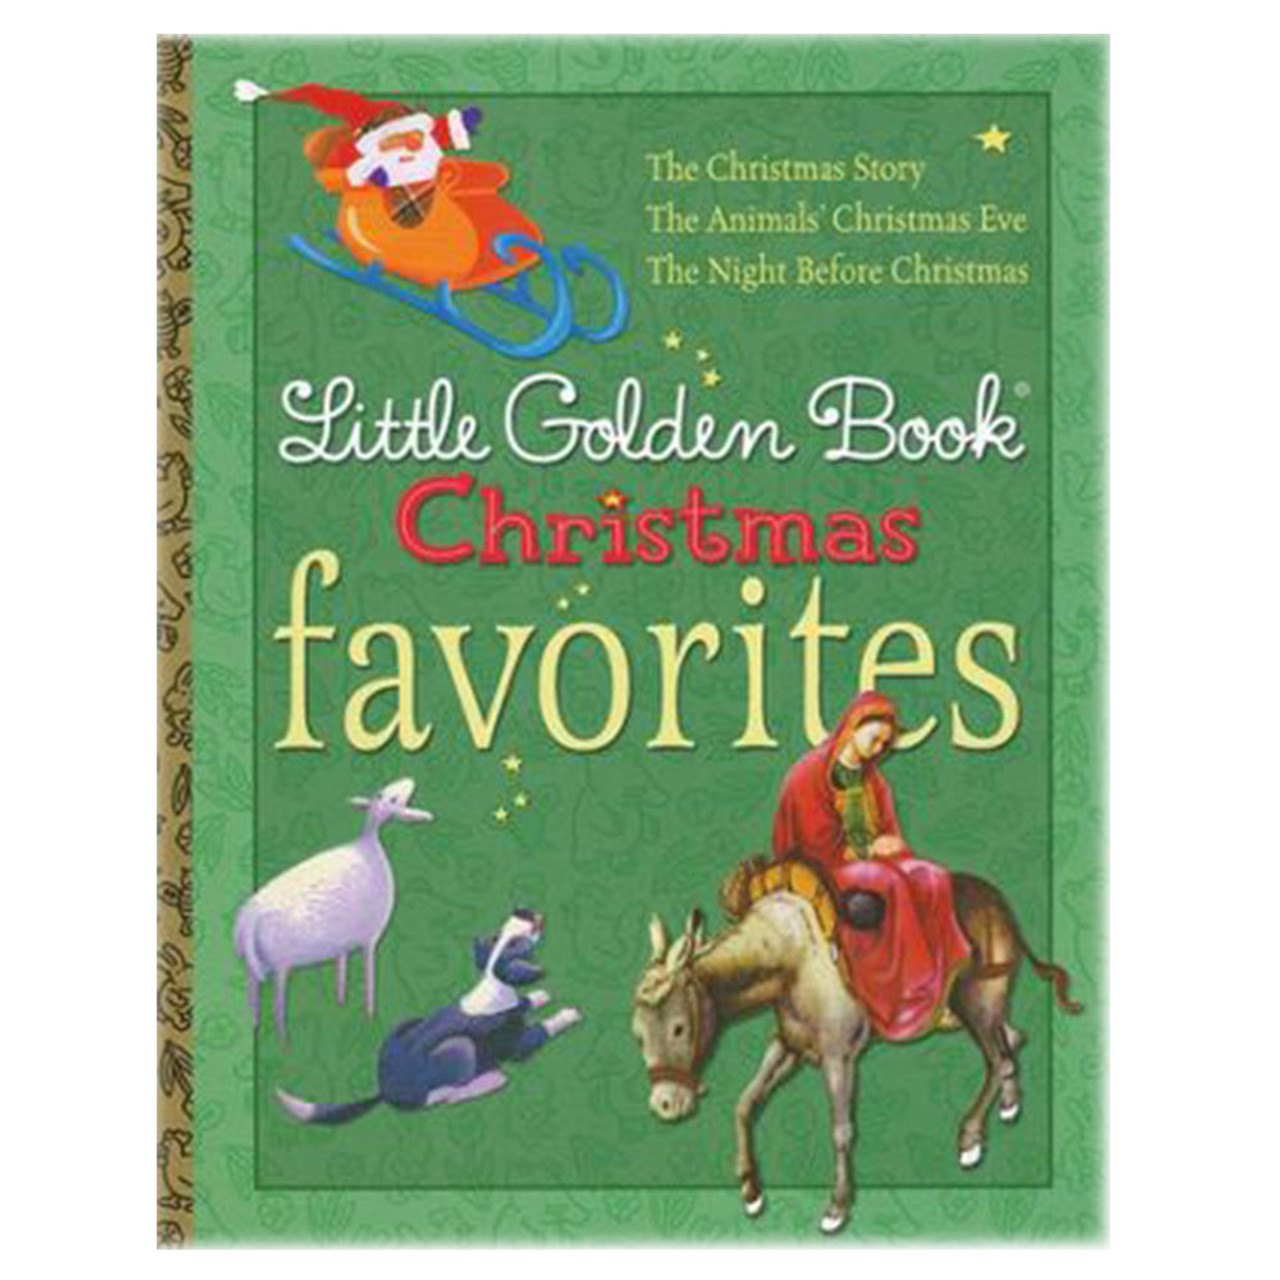 Little Golden Book of Christmas Favorites